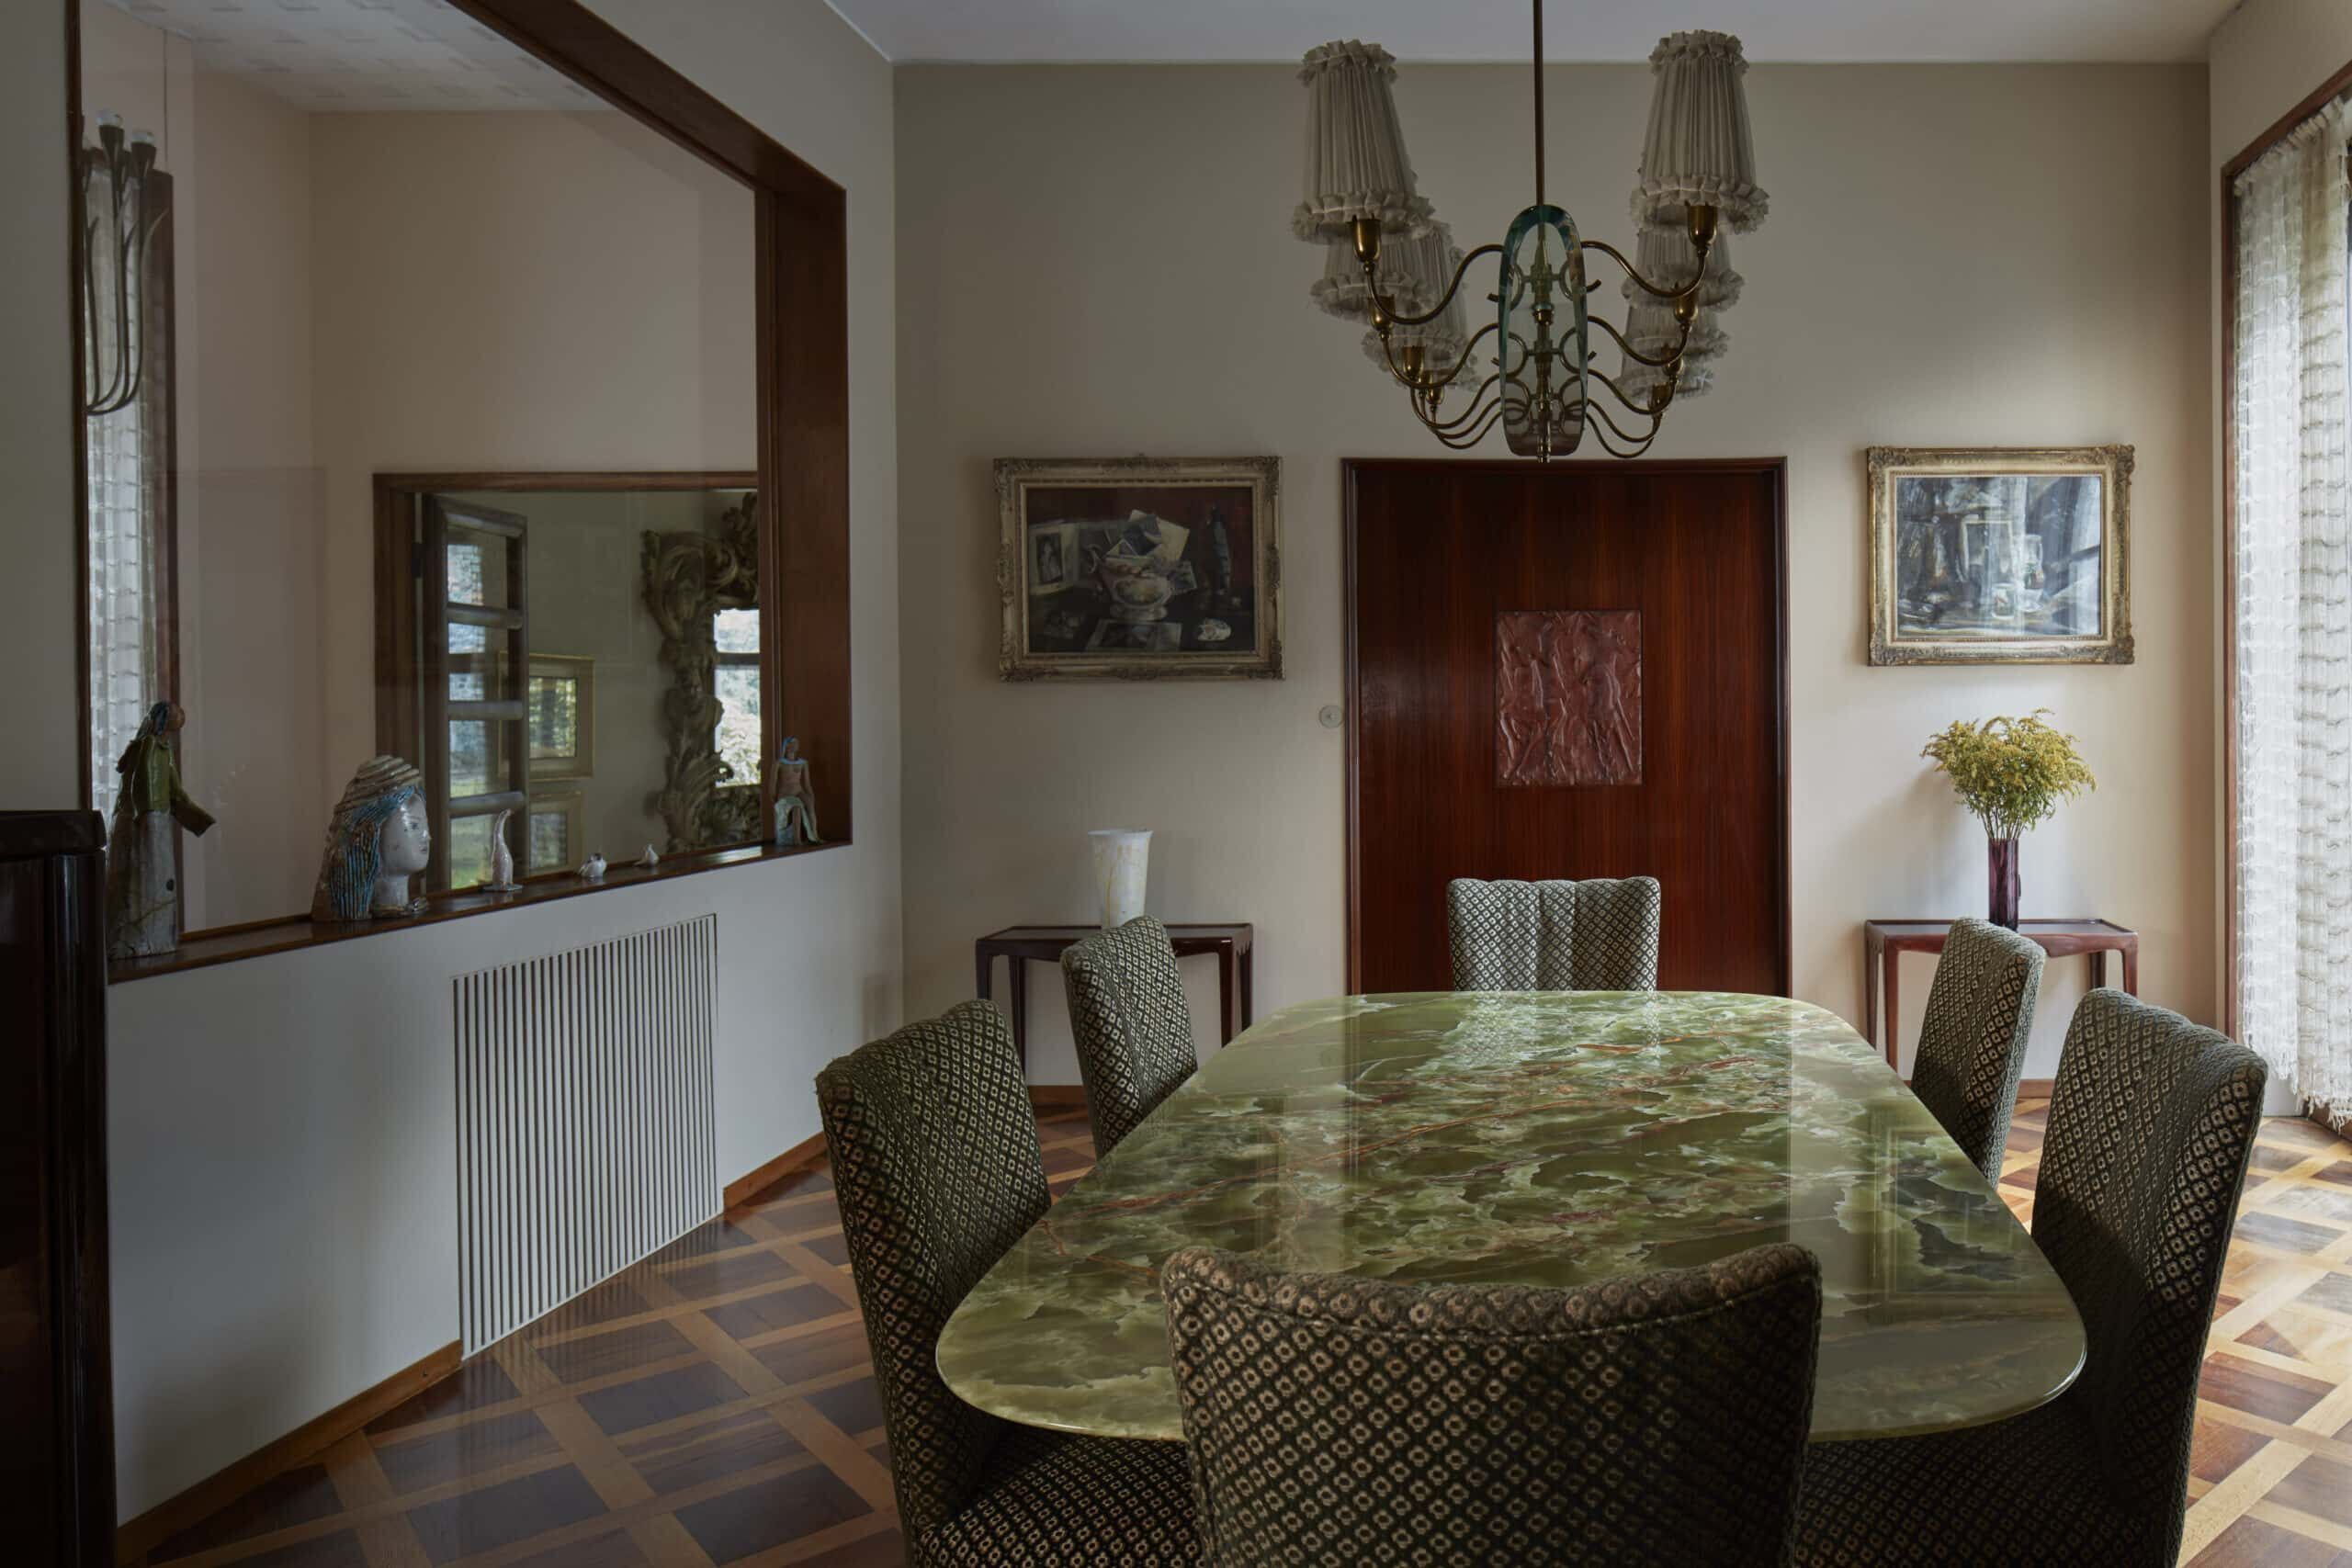 The dining room of Villa Borsani